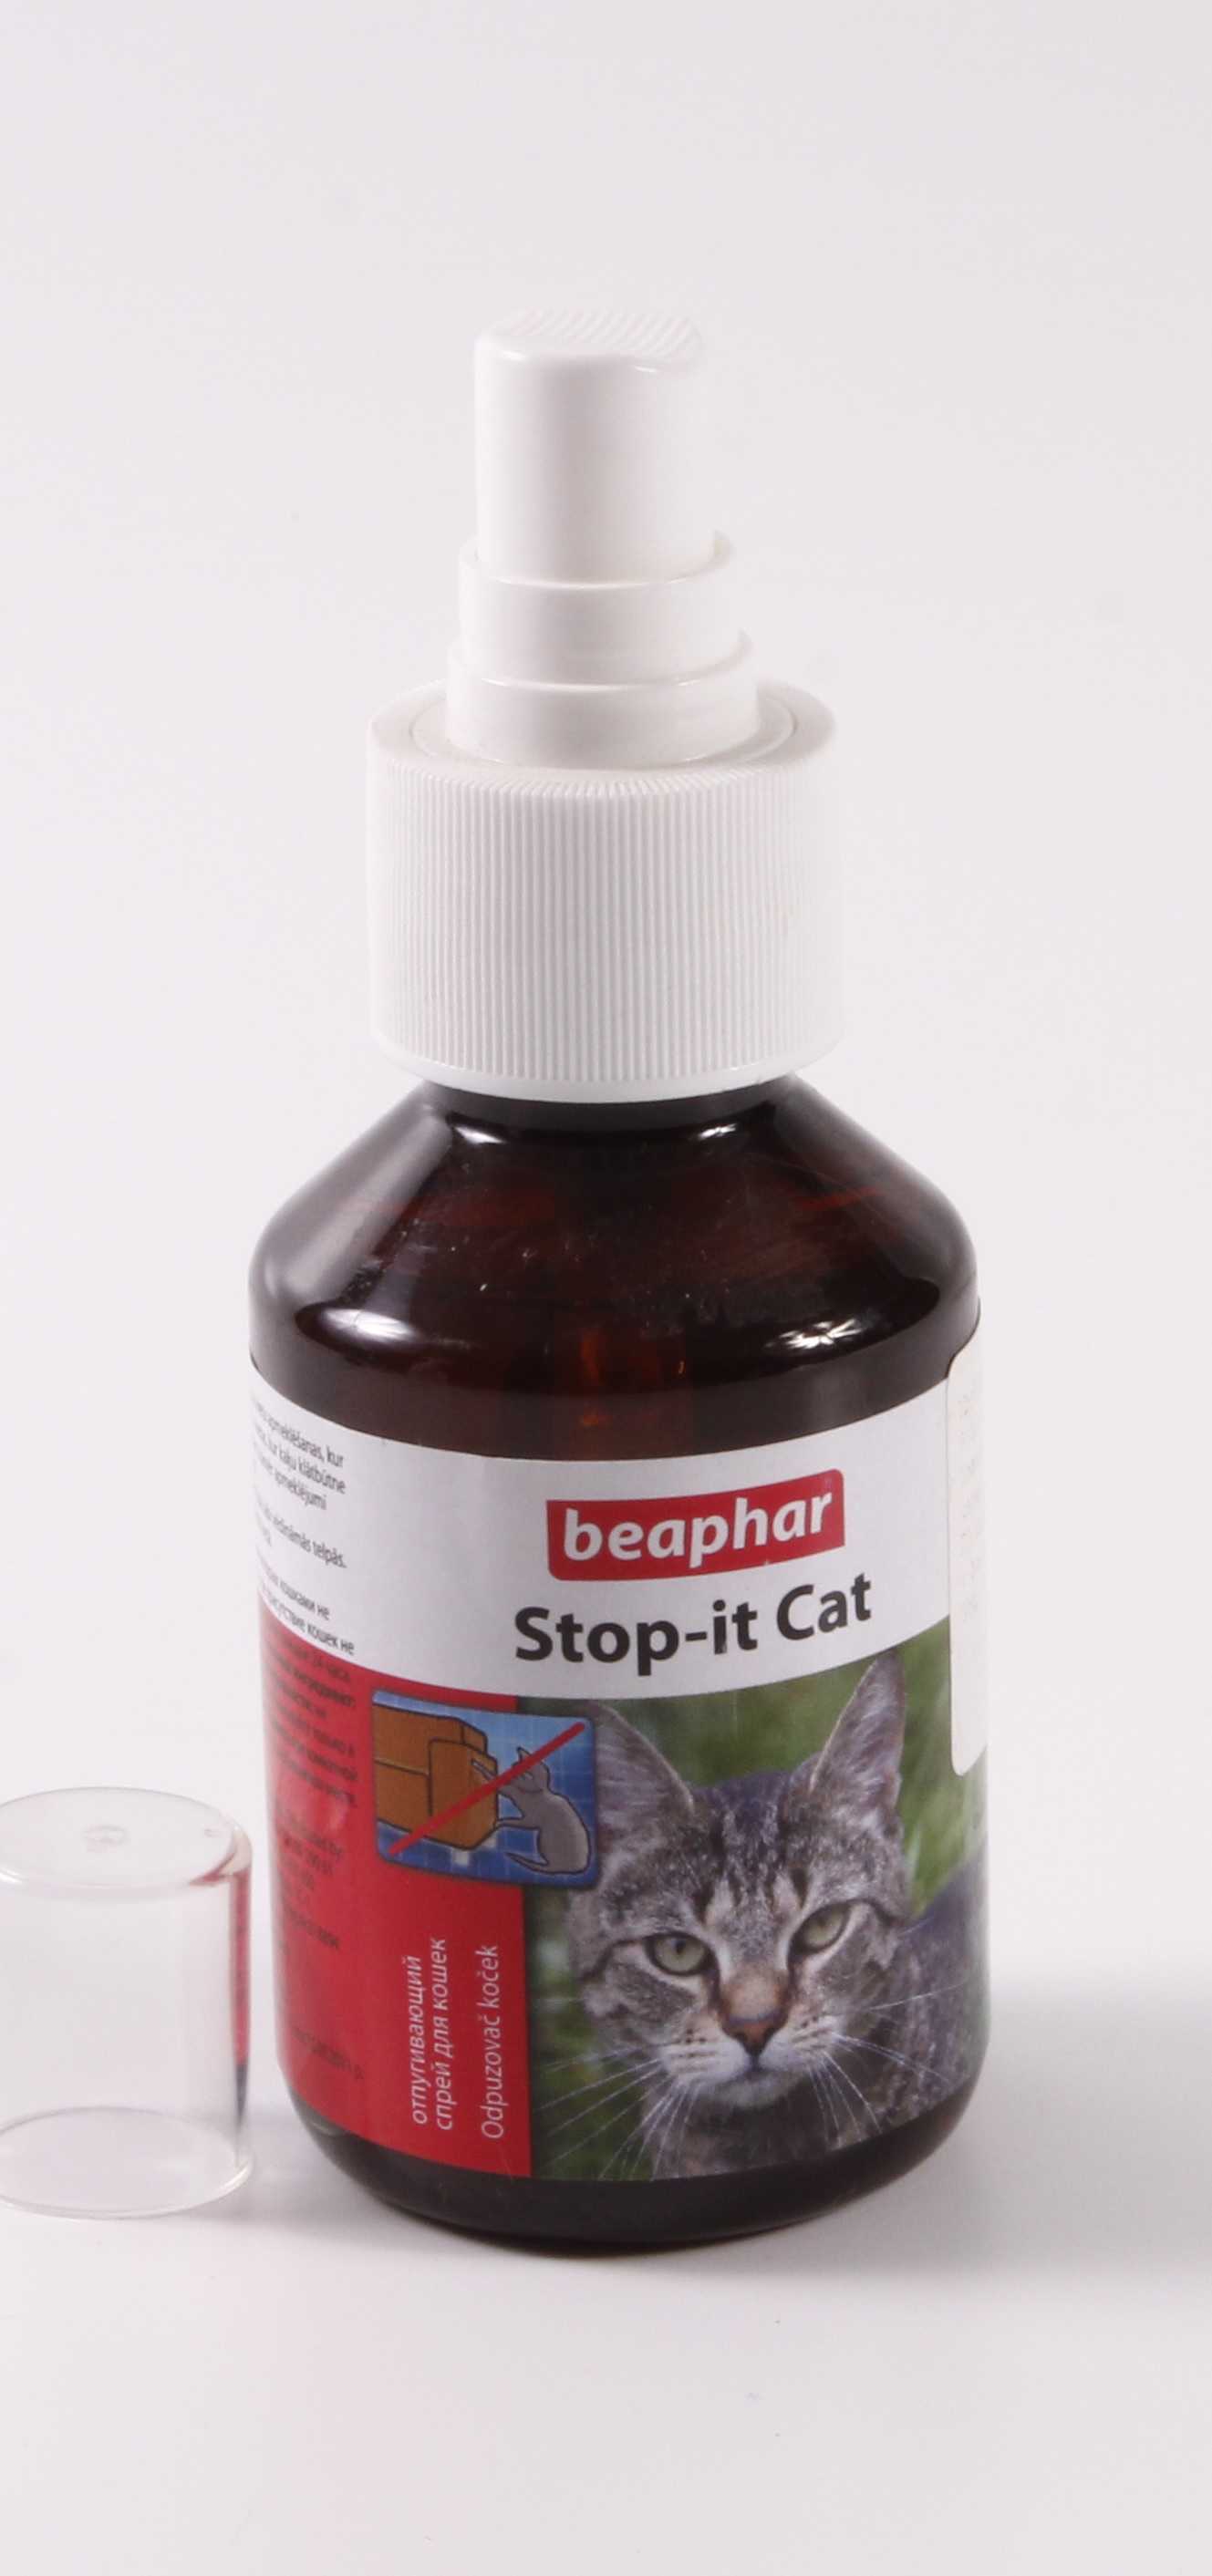 Beaphar (Беафар) Stop-It Cat - Спрей для Отпугивания Кошек